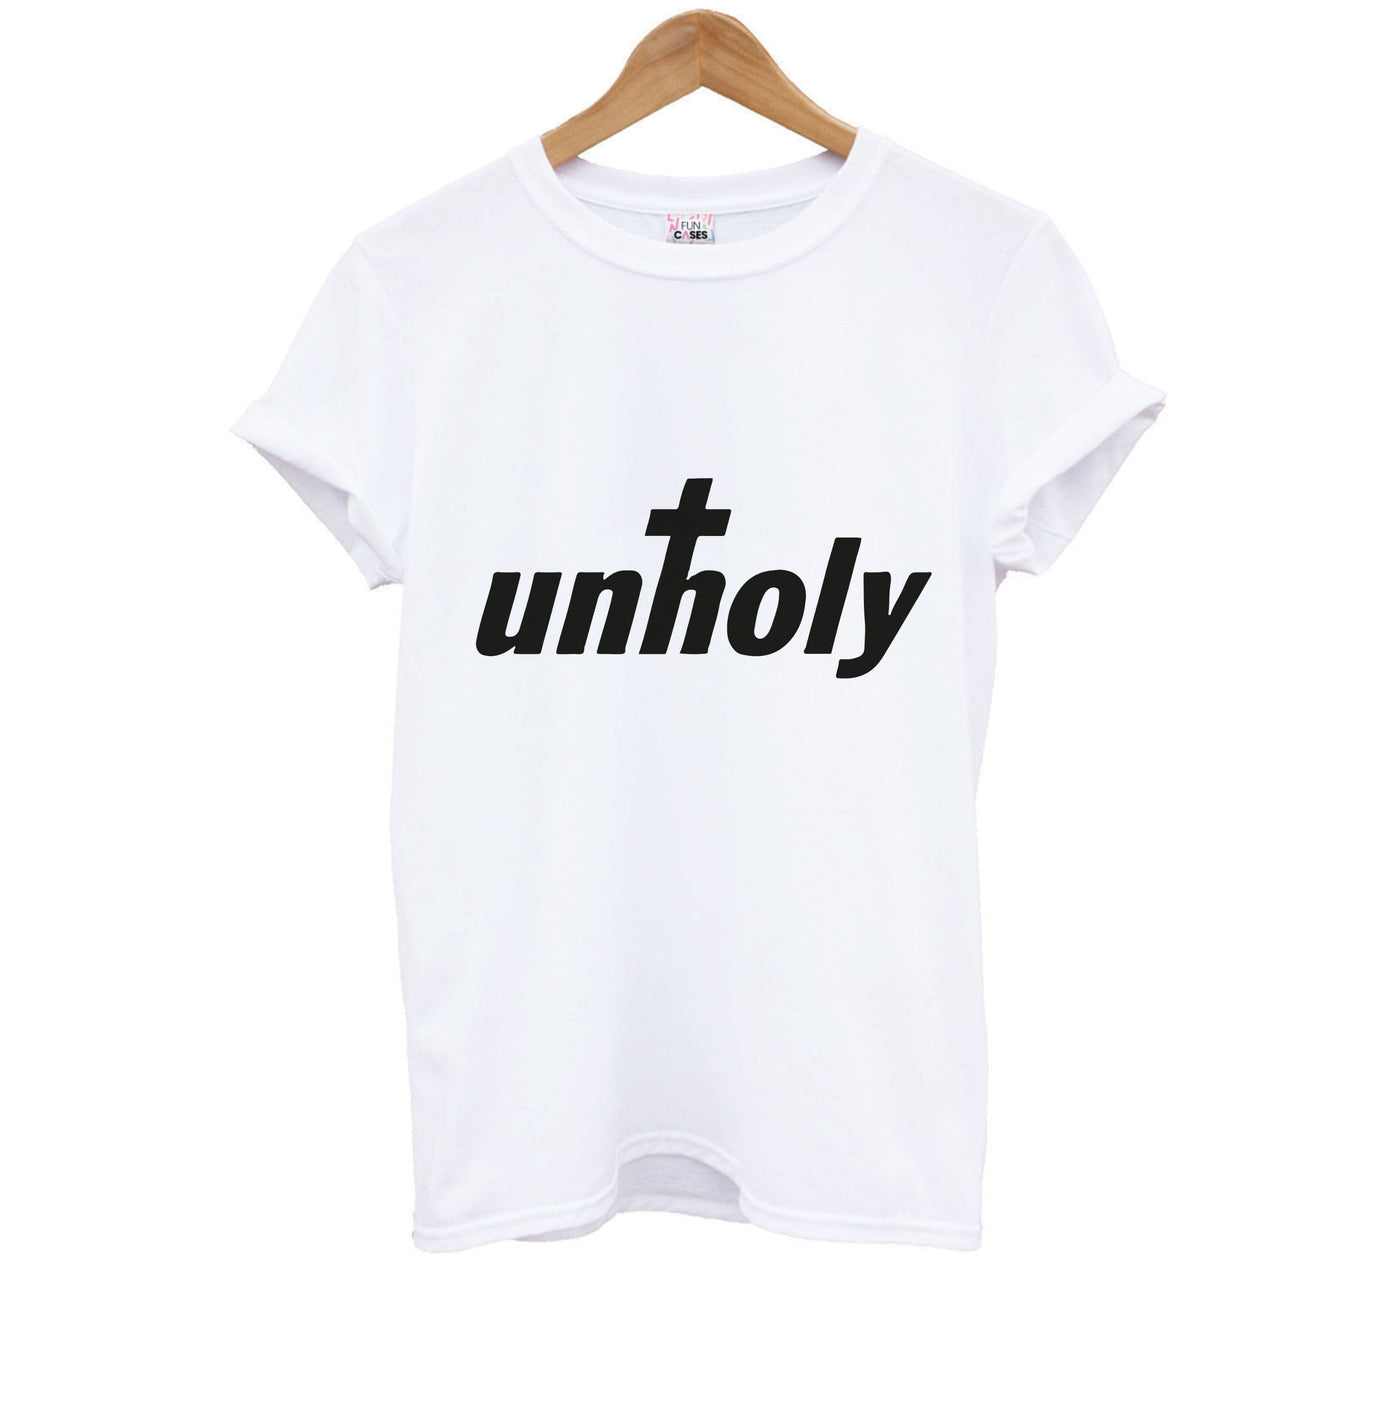 Unholy - Sam Smith Kids T-Shirt